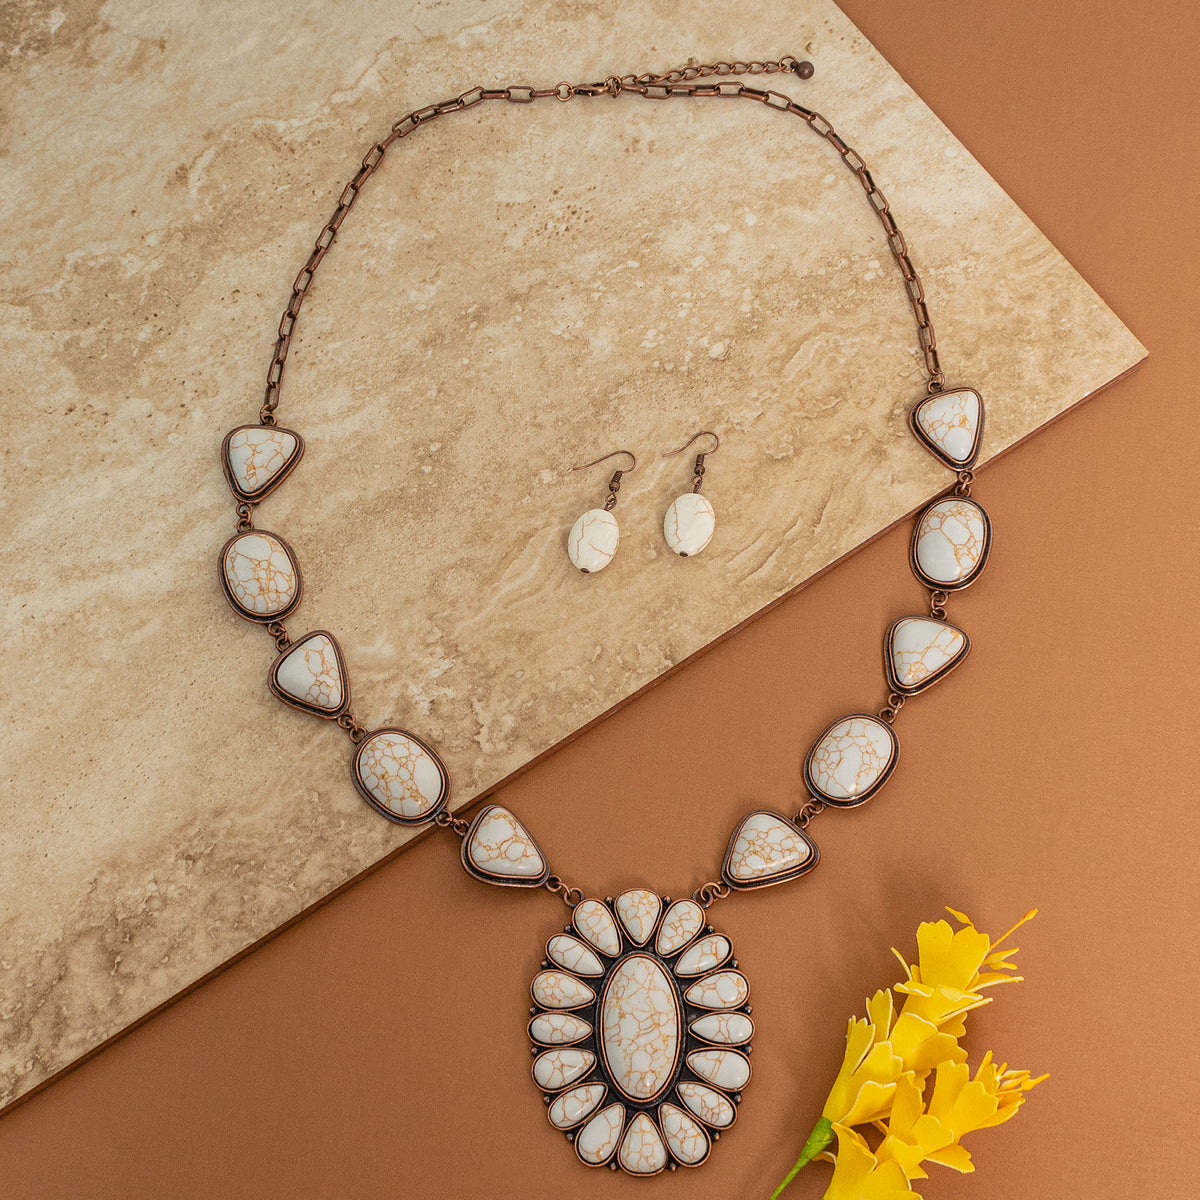 72826 - Squash Blossom Necklace - Ivory & Copper